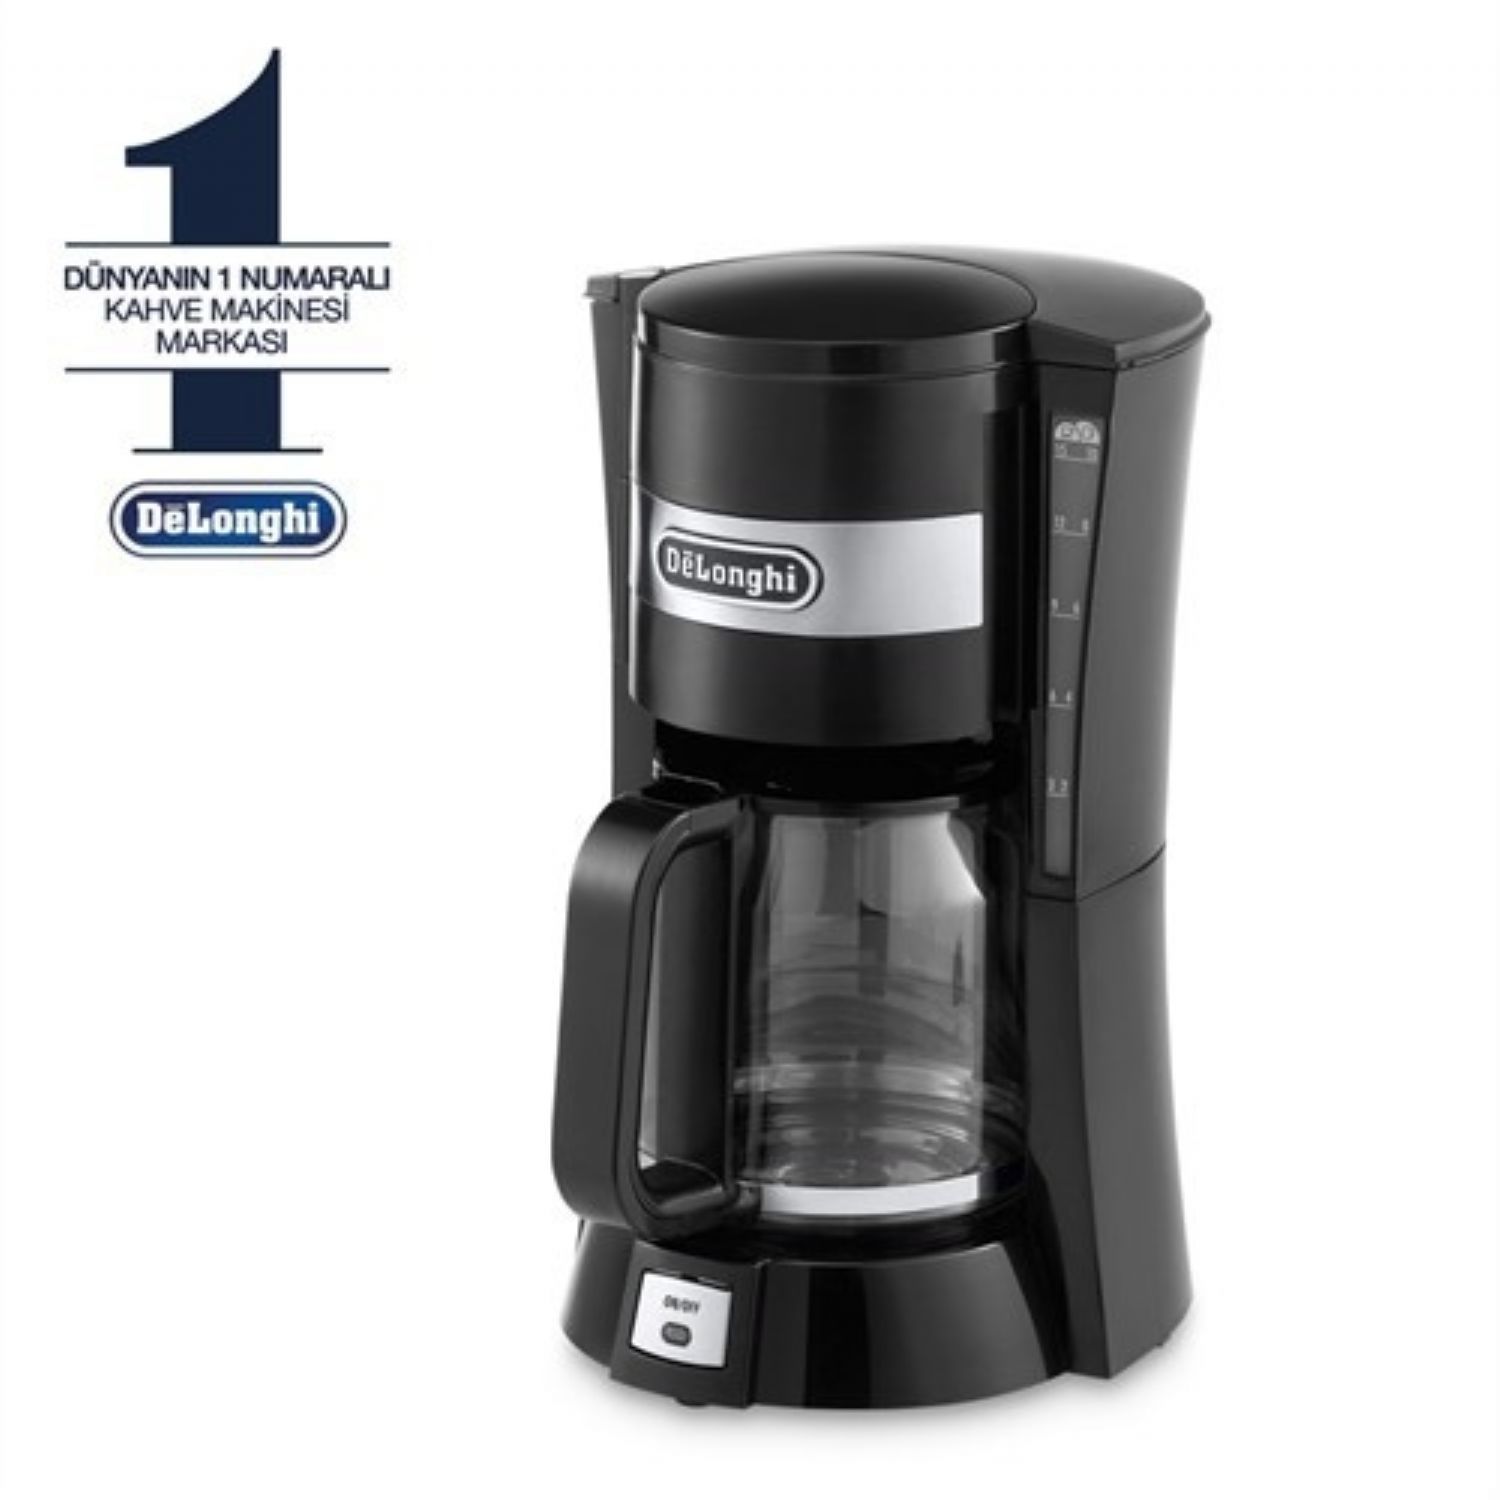 Filtre Kahve Makinesi | Delonghi ICM15210 Filtre Kahve Makinesi | ICM15210 | Delonghi ICM15210 Filtre Kahve Makinesi, ICM15210, ıcm15210, icm15210 | 